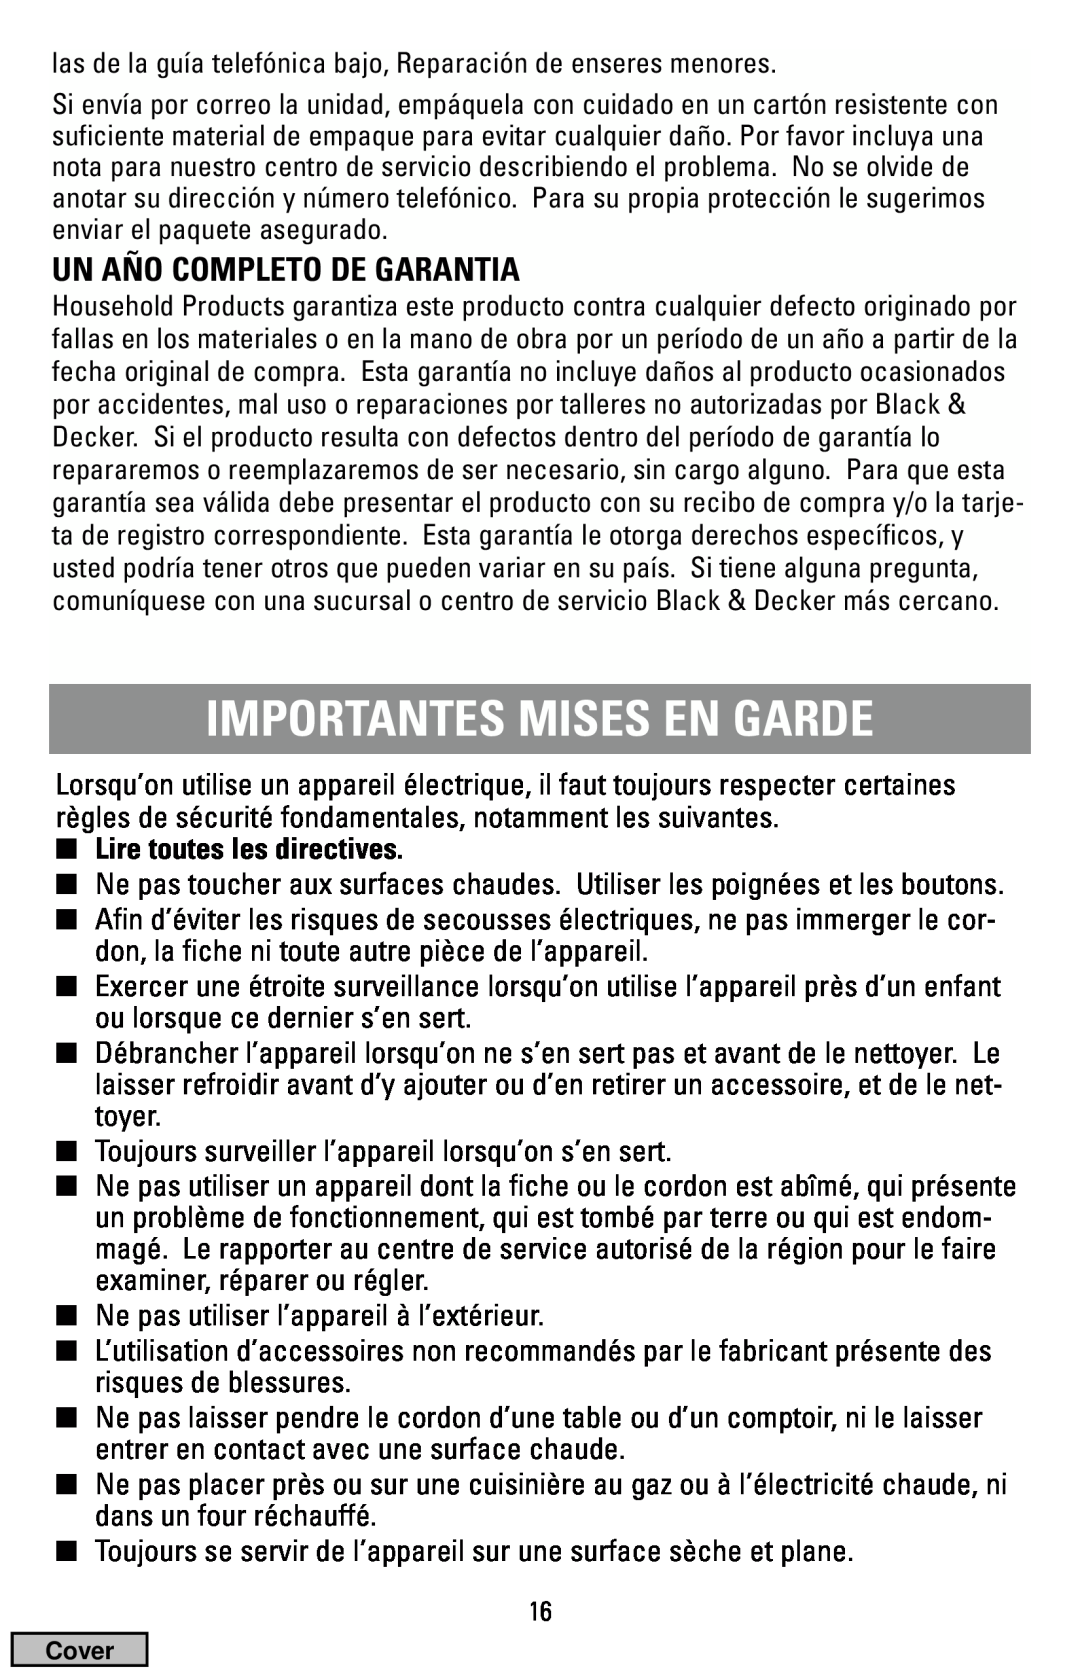 Black & Decker IG100 manual Importantes Mises En Garde, Un Año Completo De Garantia, Lire toutes les directives 